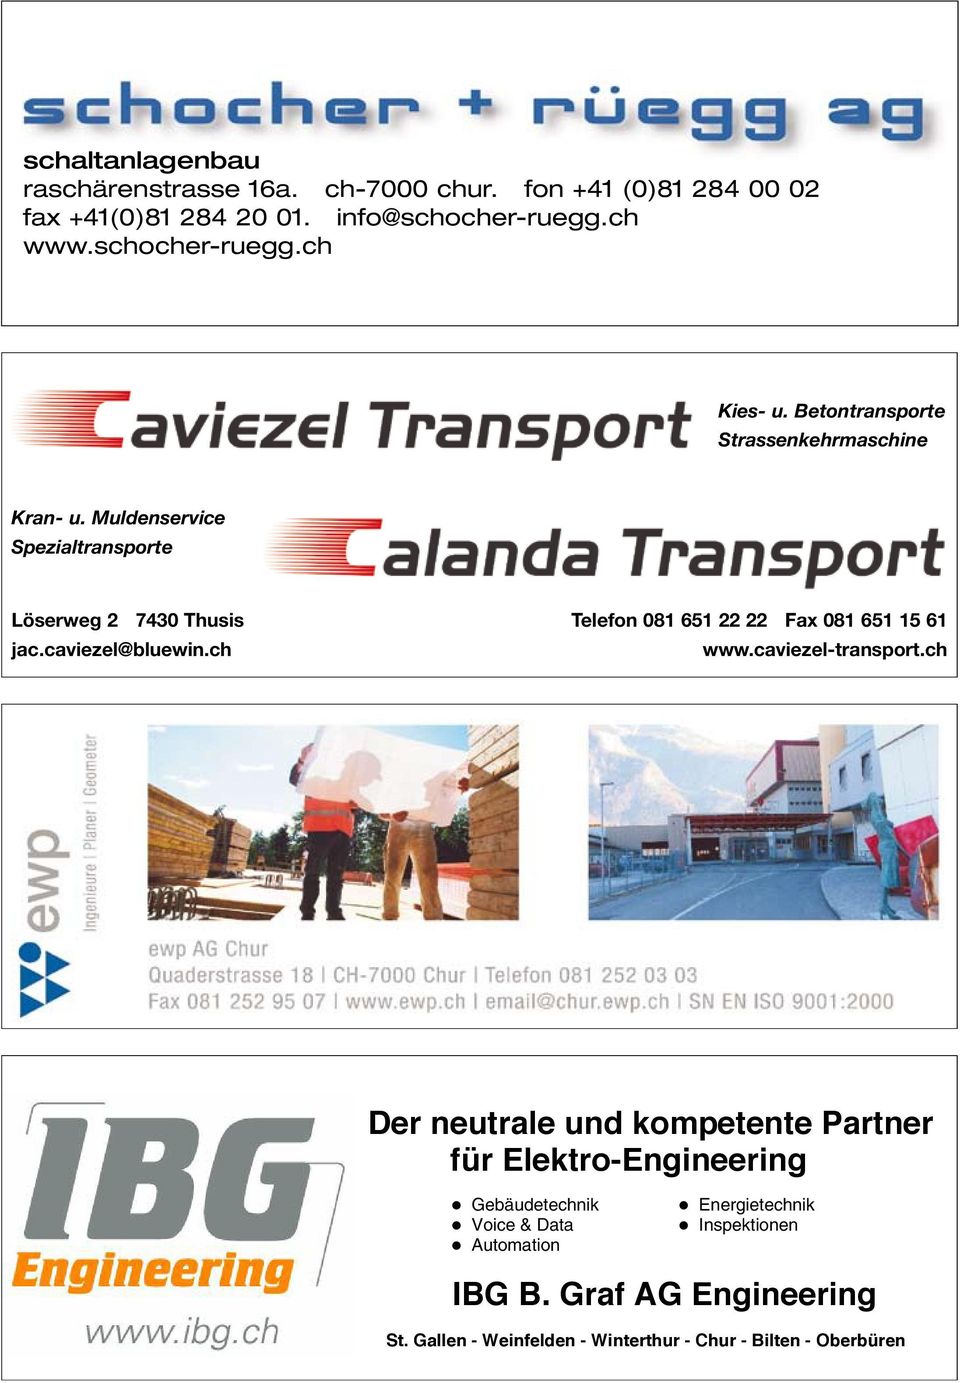 caviezel@bluewin.ch Telefon 081 651 22 22 Fax 081 651 15 61 www.caviezel-transport.